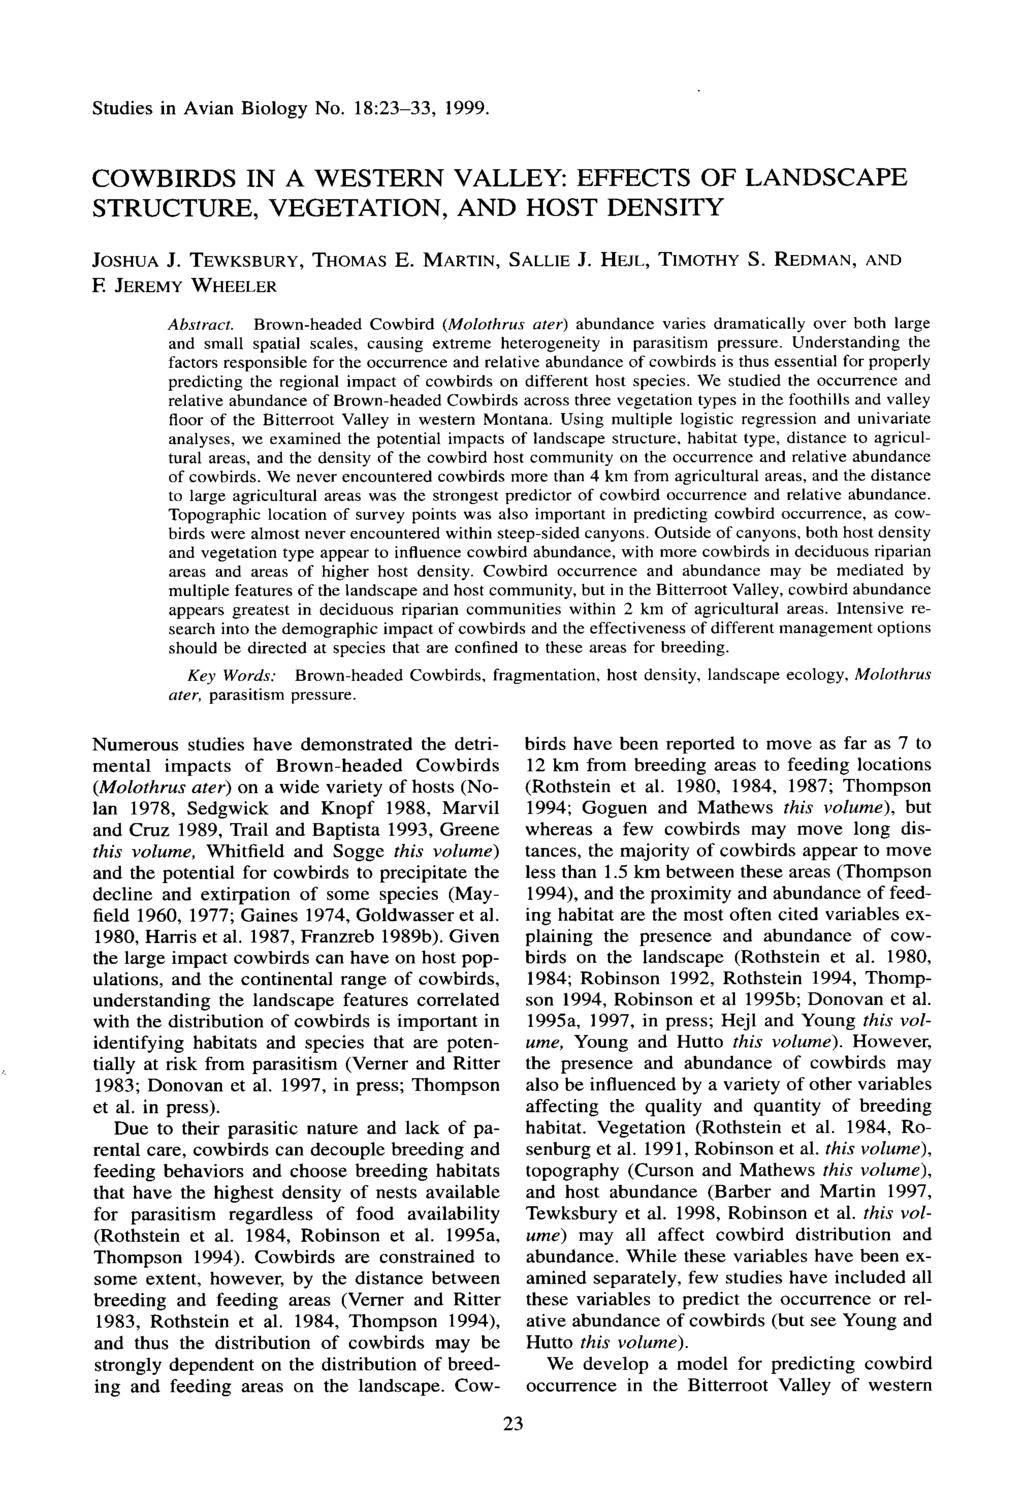 Studies in Avian Biology No. 18:23-33, 1999. COWBIRDS IN A WESTERN VALLEY: EFFECTS OF LANDSCAPE STRUCTURE, VEGETATION, AND HOST DENSITY JOSHUA J. TEWKSBURY, THOMAS E. MARTIN, SALLIE J.